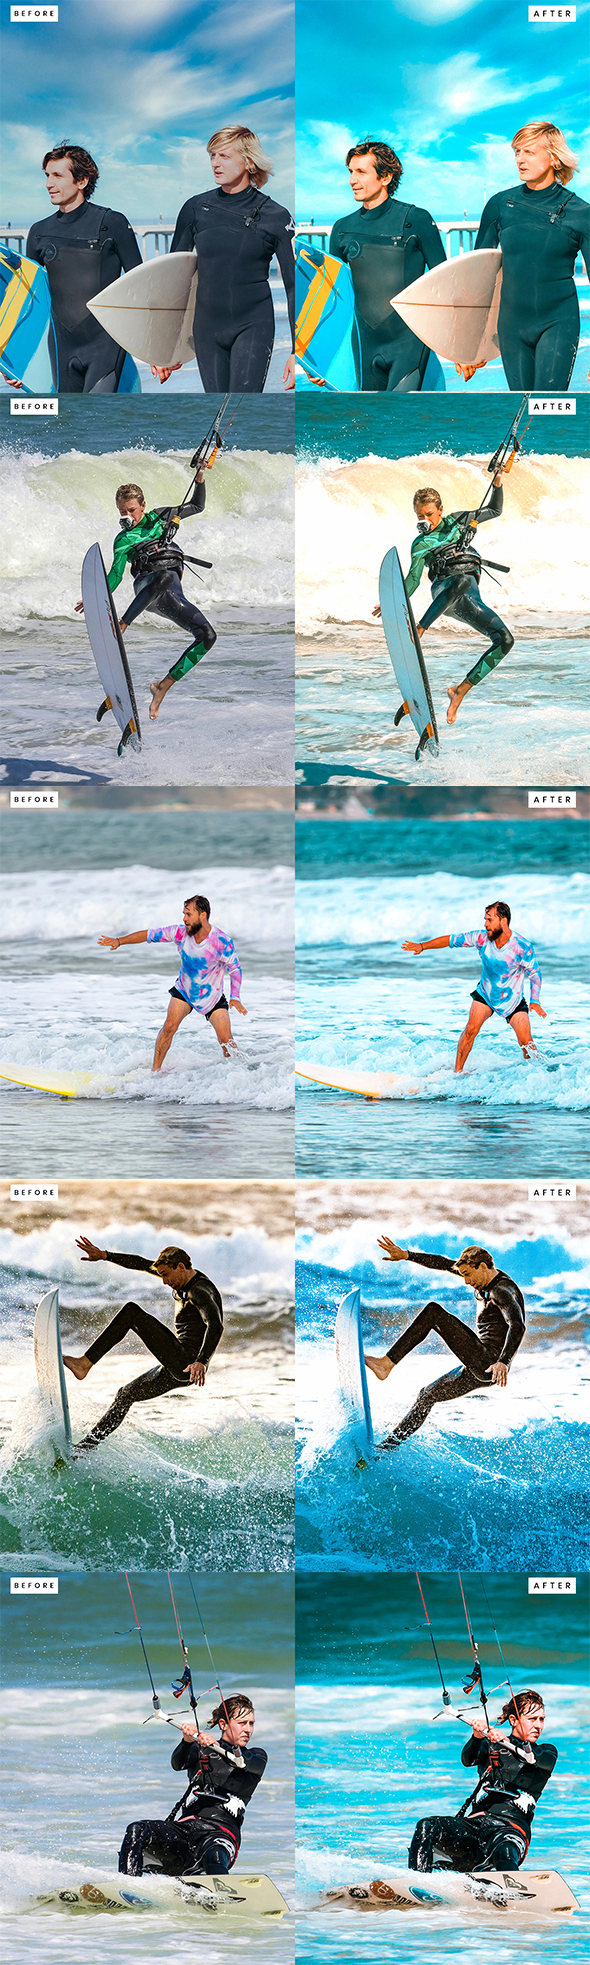 Surfer Photoshop Actions